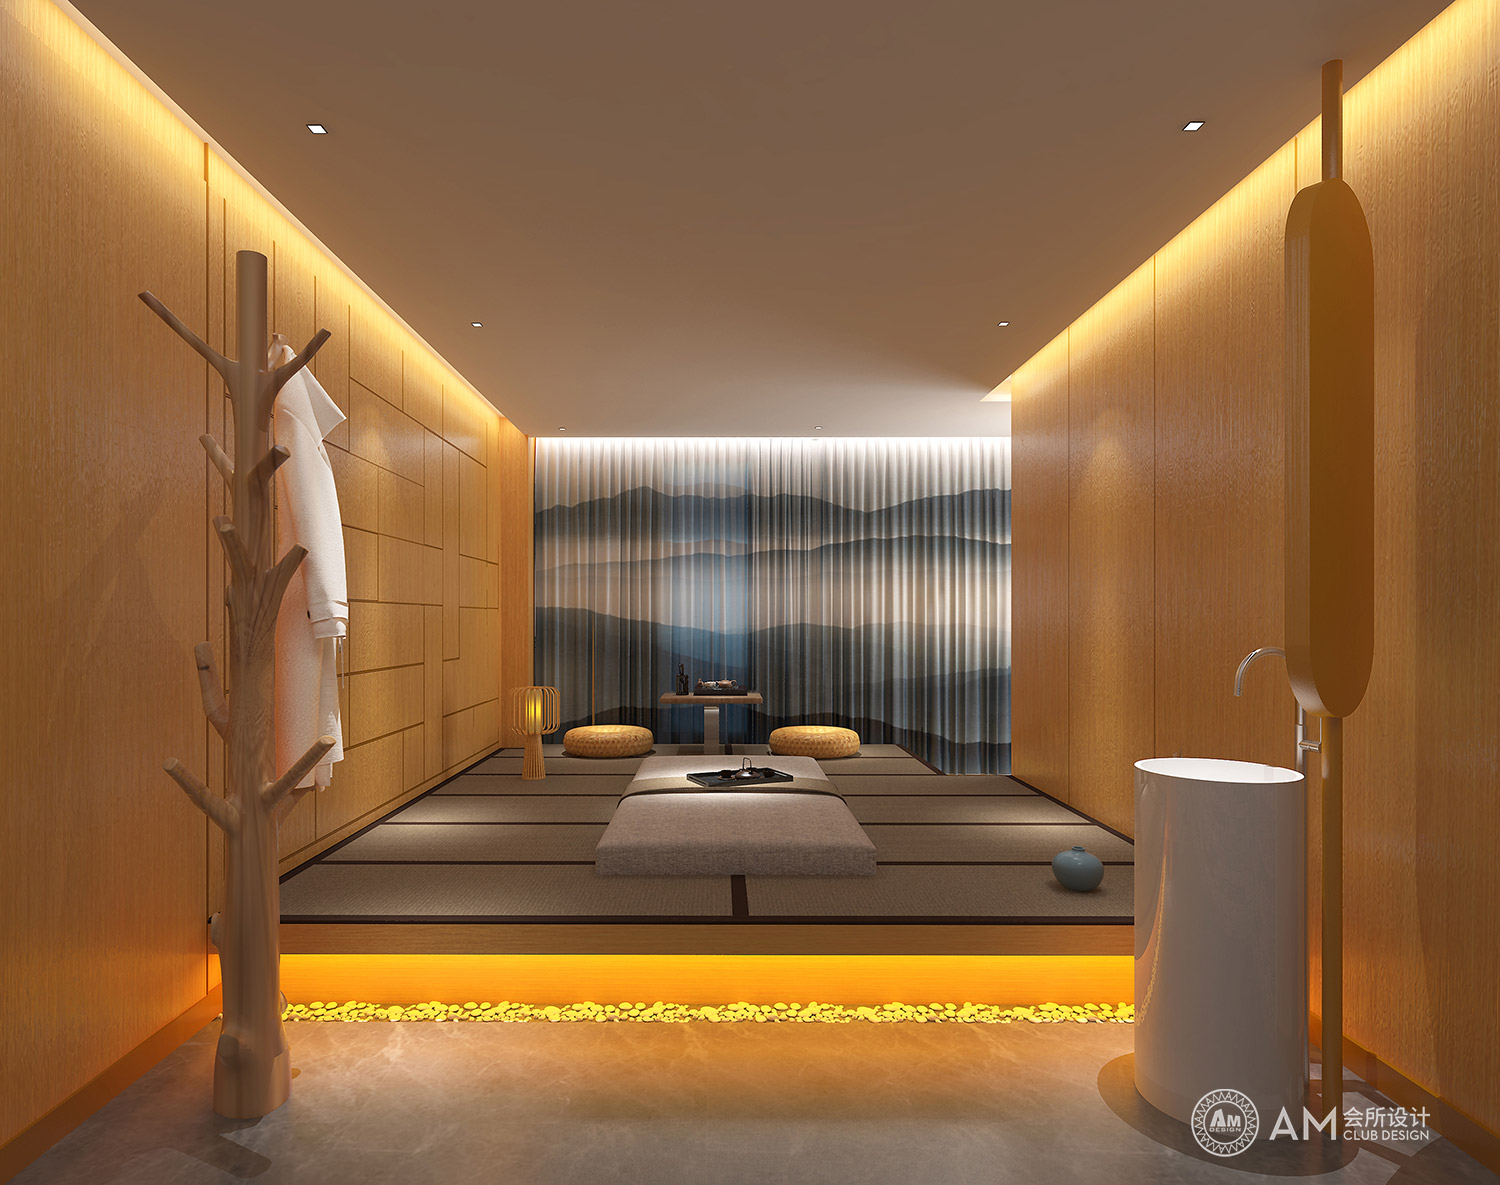 AM设计 | 大悦城顶级SPA会所spa室设计